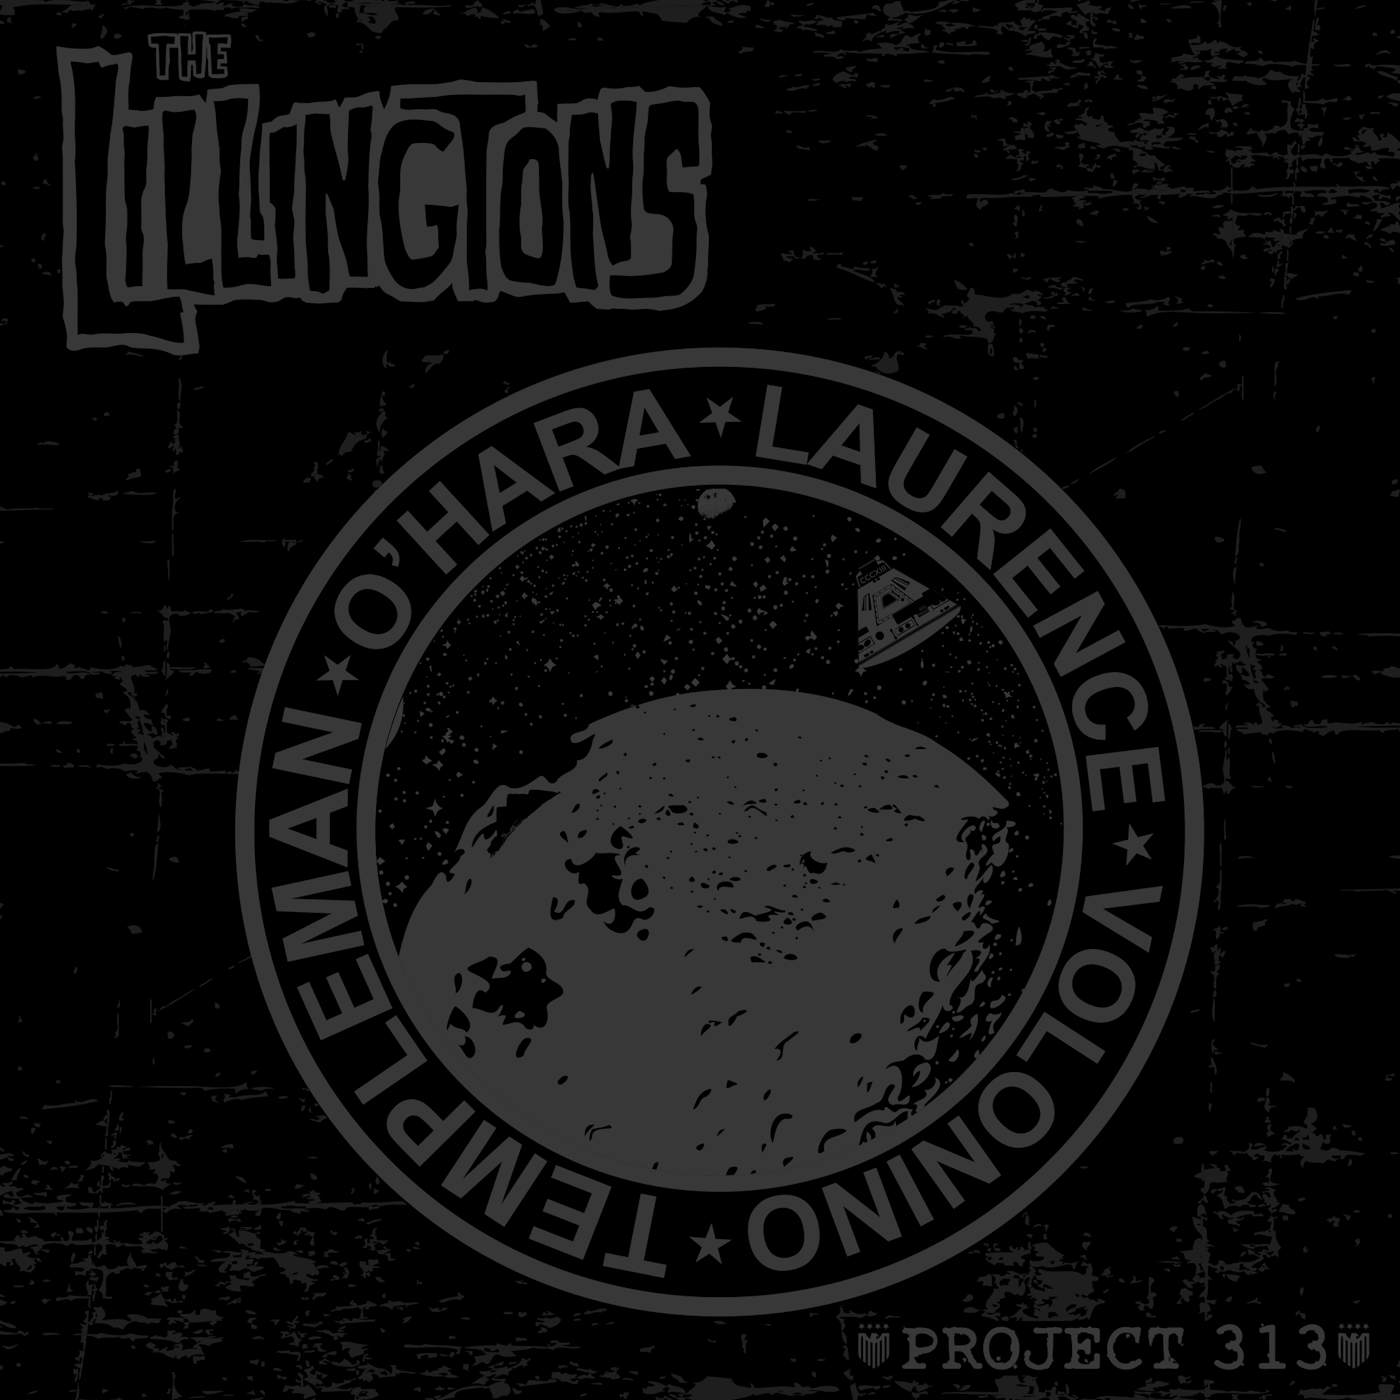 The Lillingtons Project 313 Vinyl Record